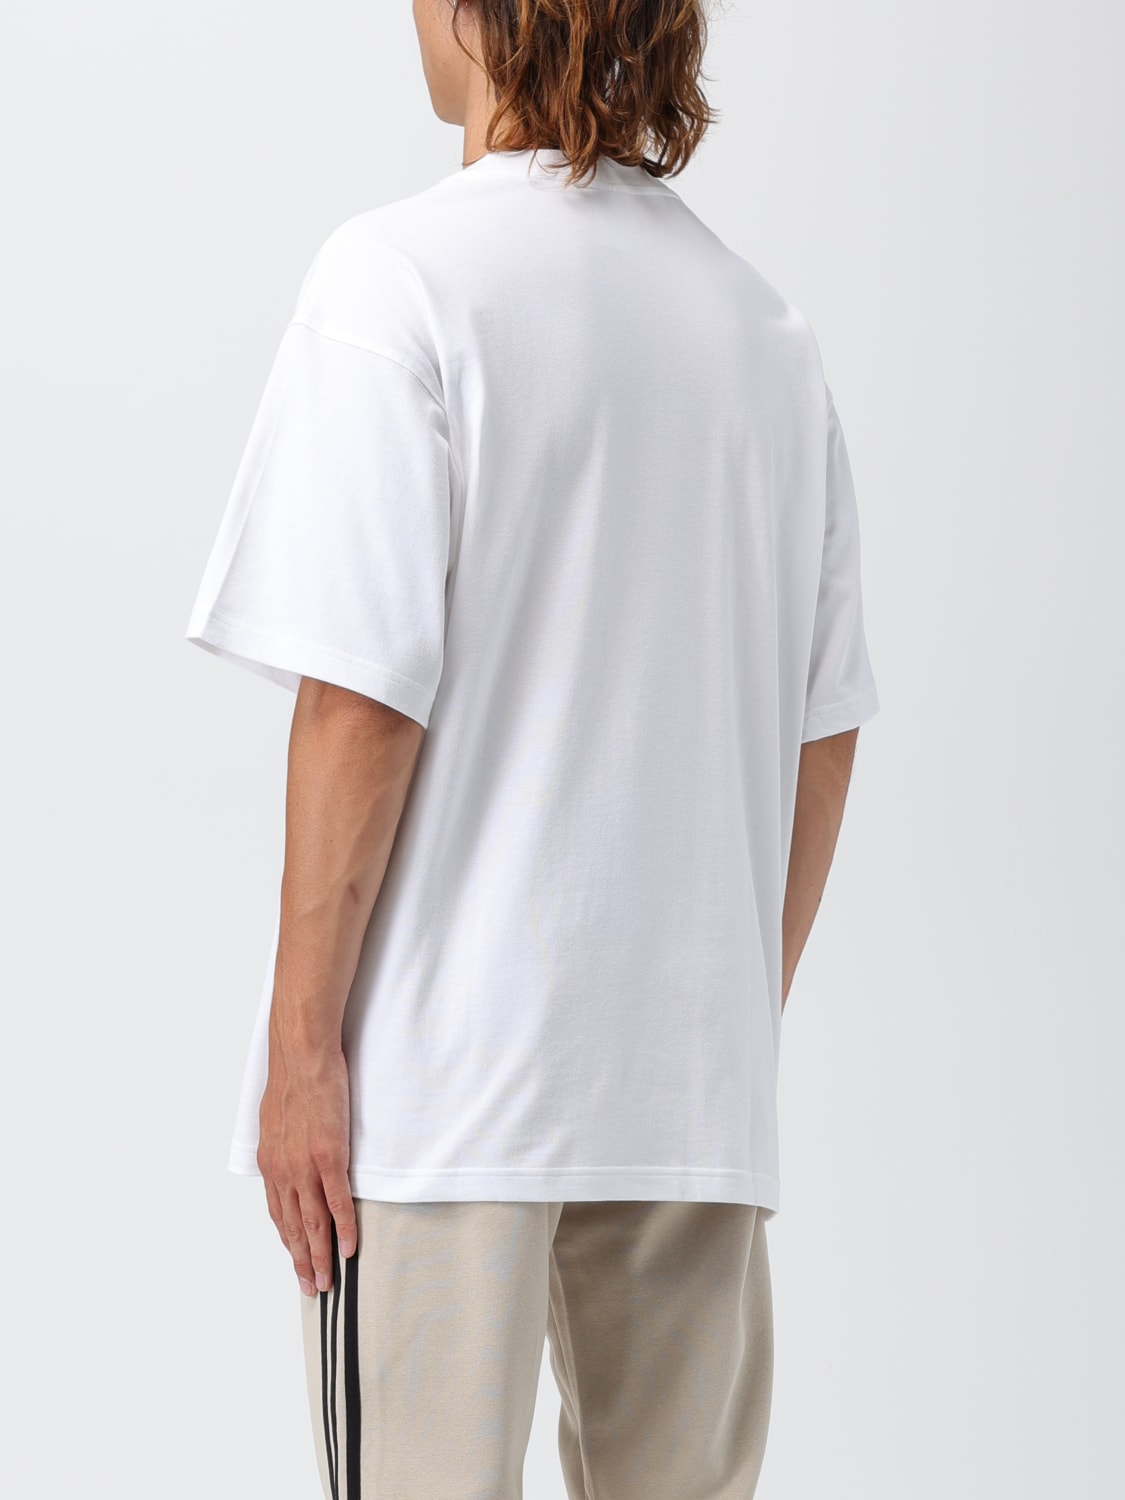 ADIDAS ORIGINALS: - IM4388 with White at cotton t- shirt online t-shirt Adidas | Originals logo